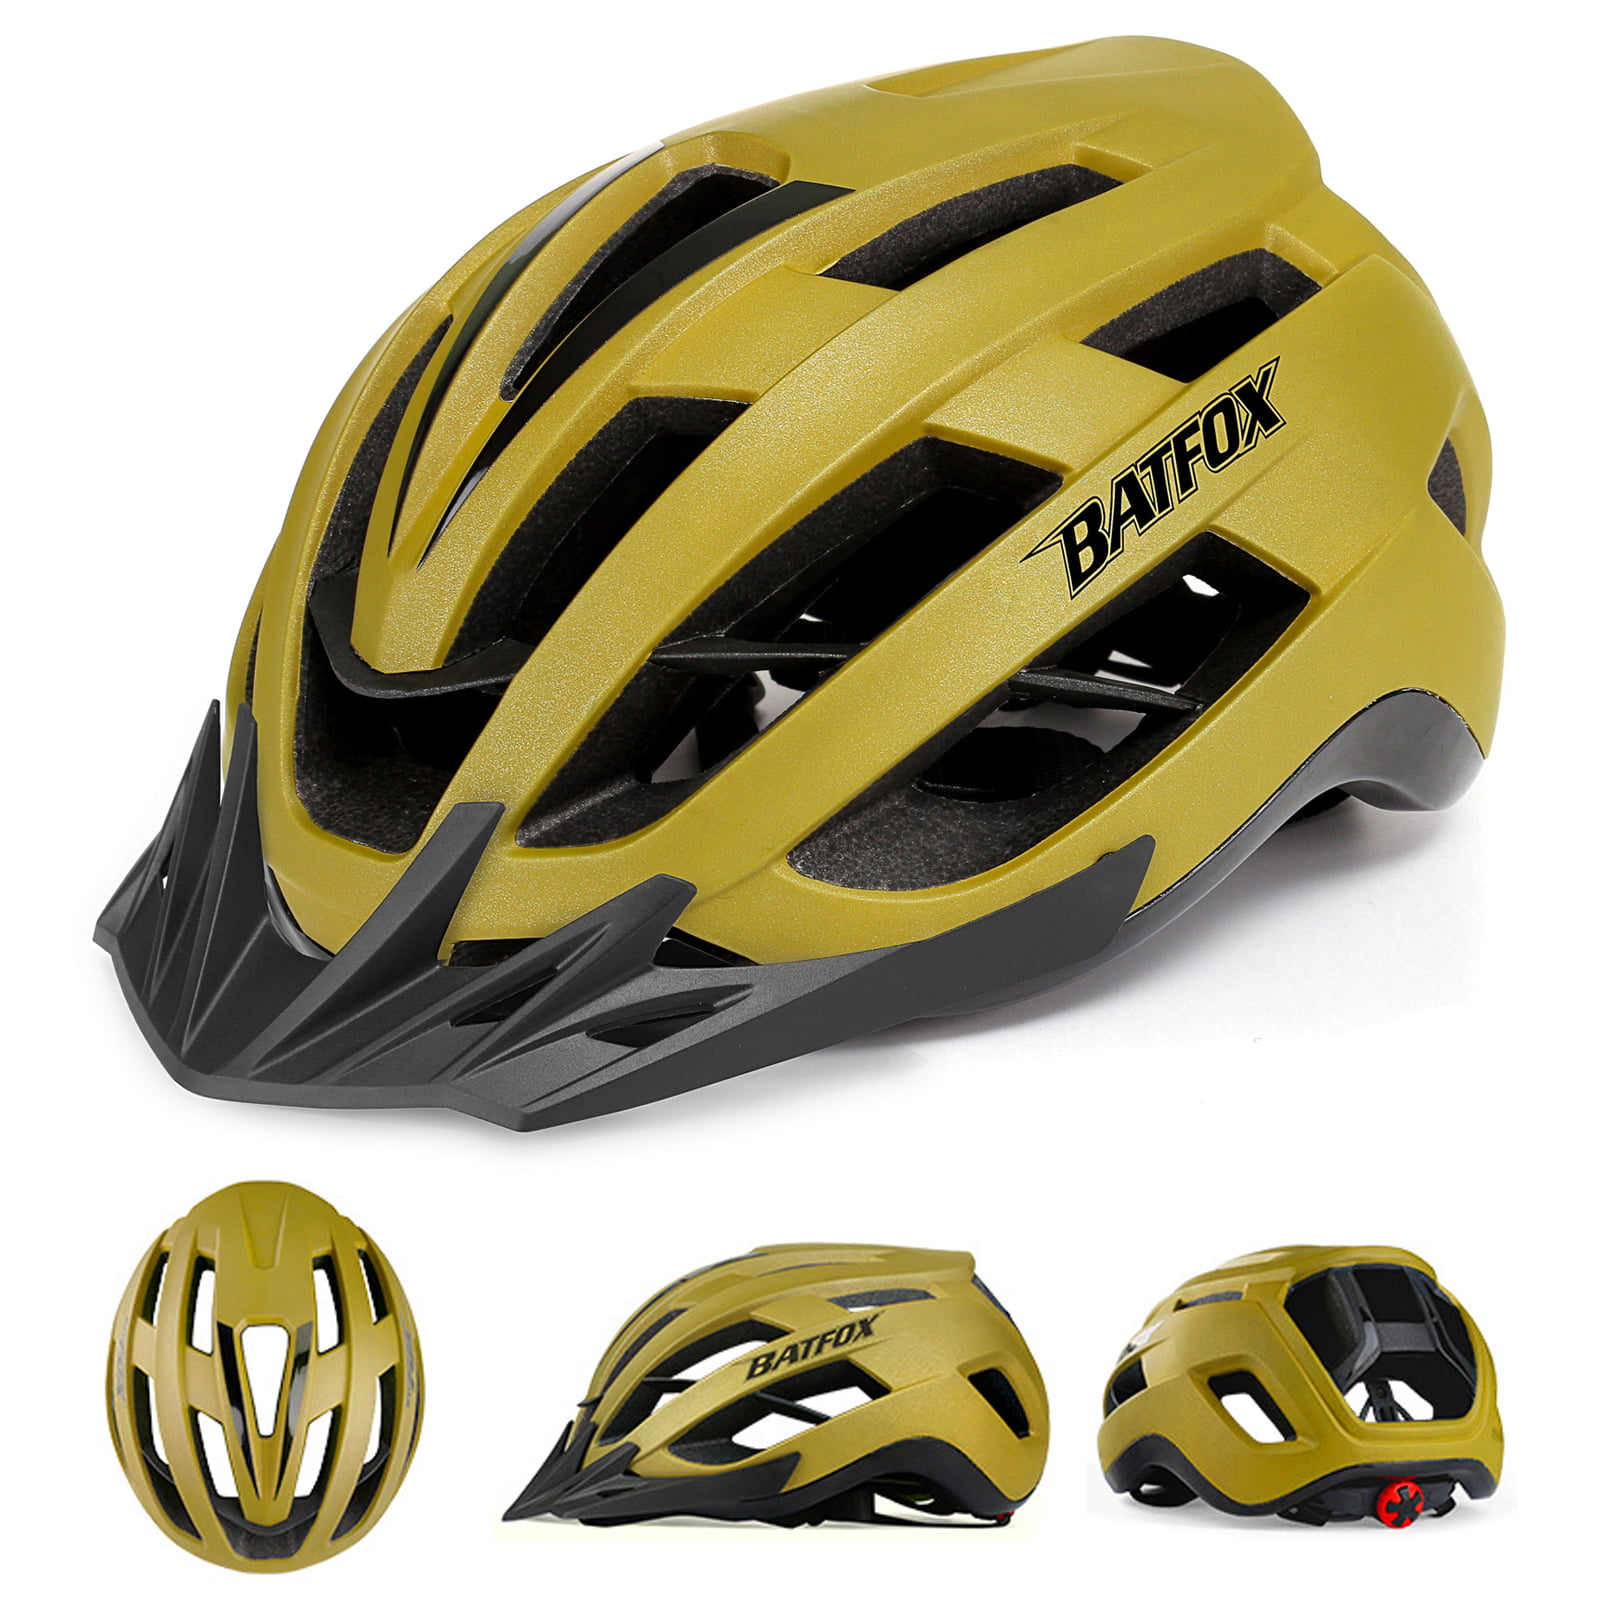 Black Yellow BATFOX Bicycle Helmet Cycling Helmets MTB Road Mountain Bike 